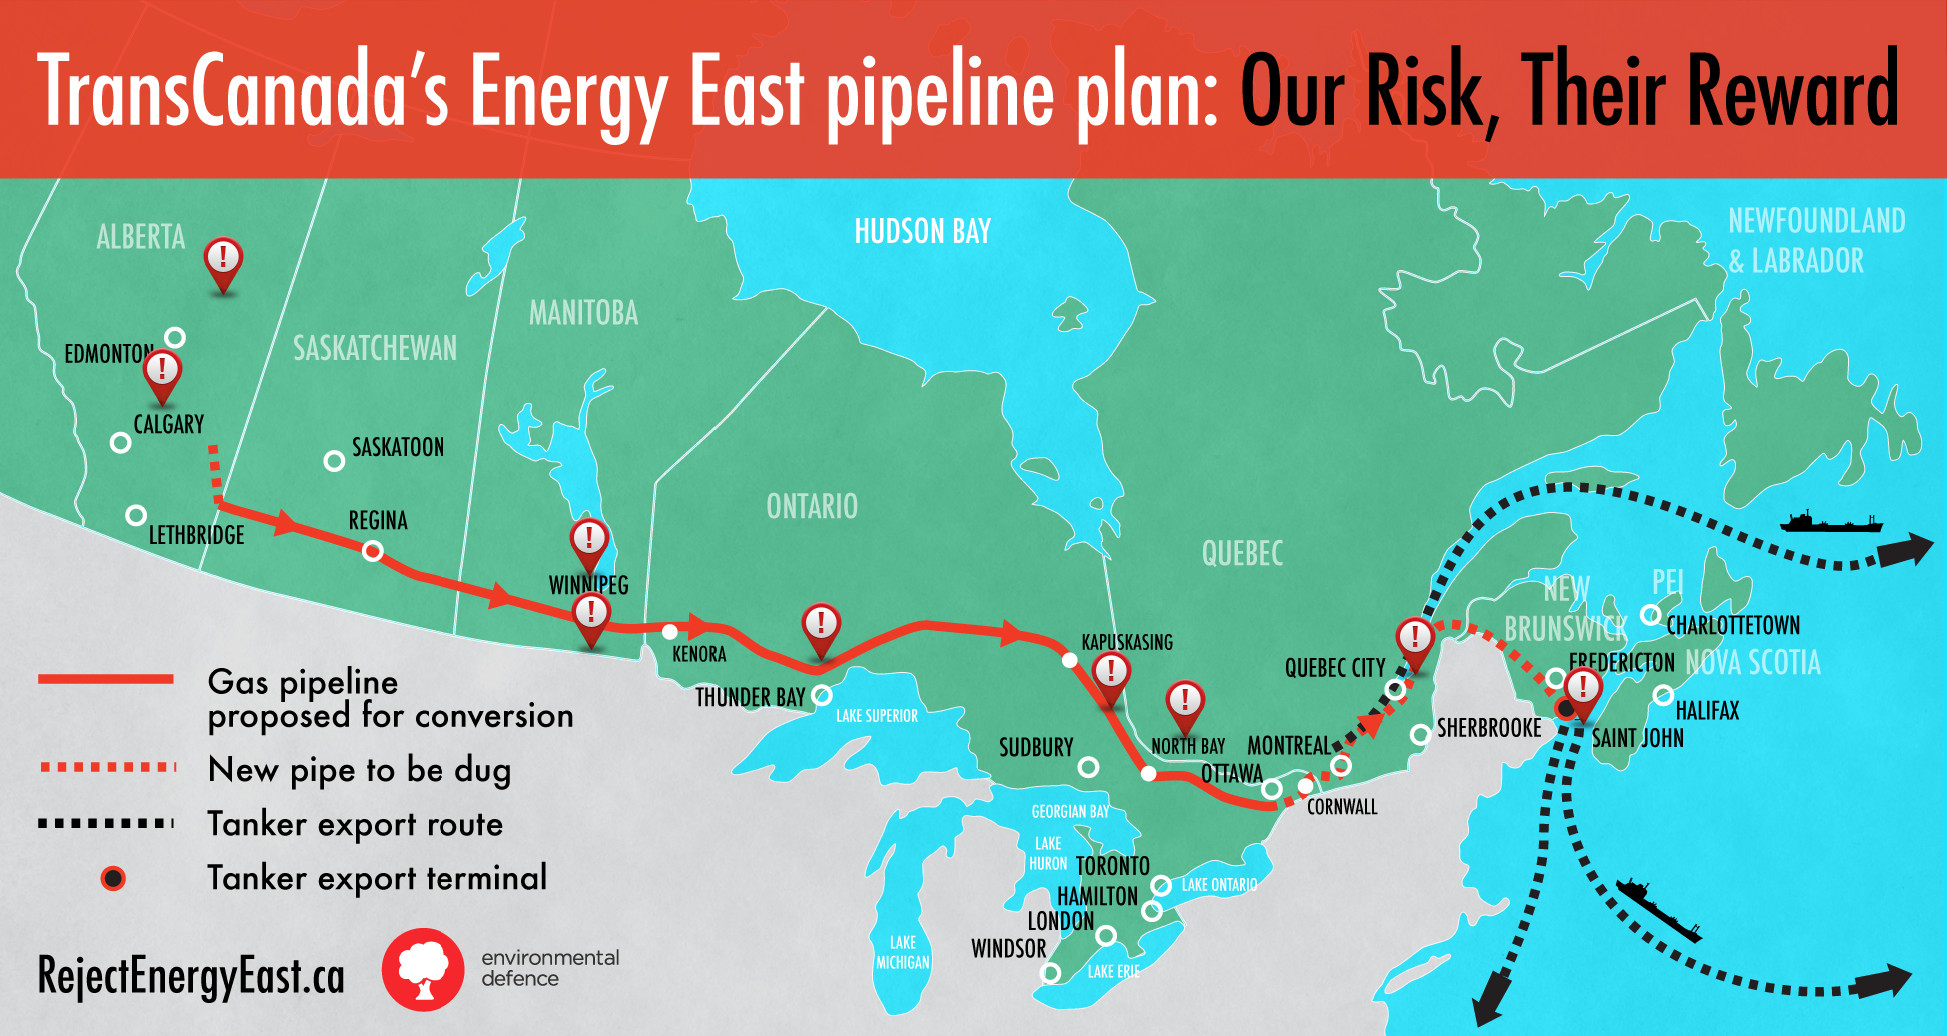 energy-east-pipeline-mind-map